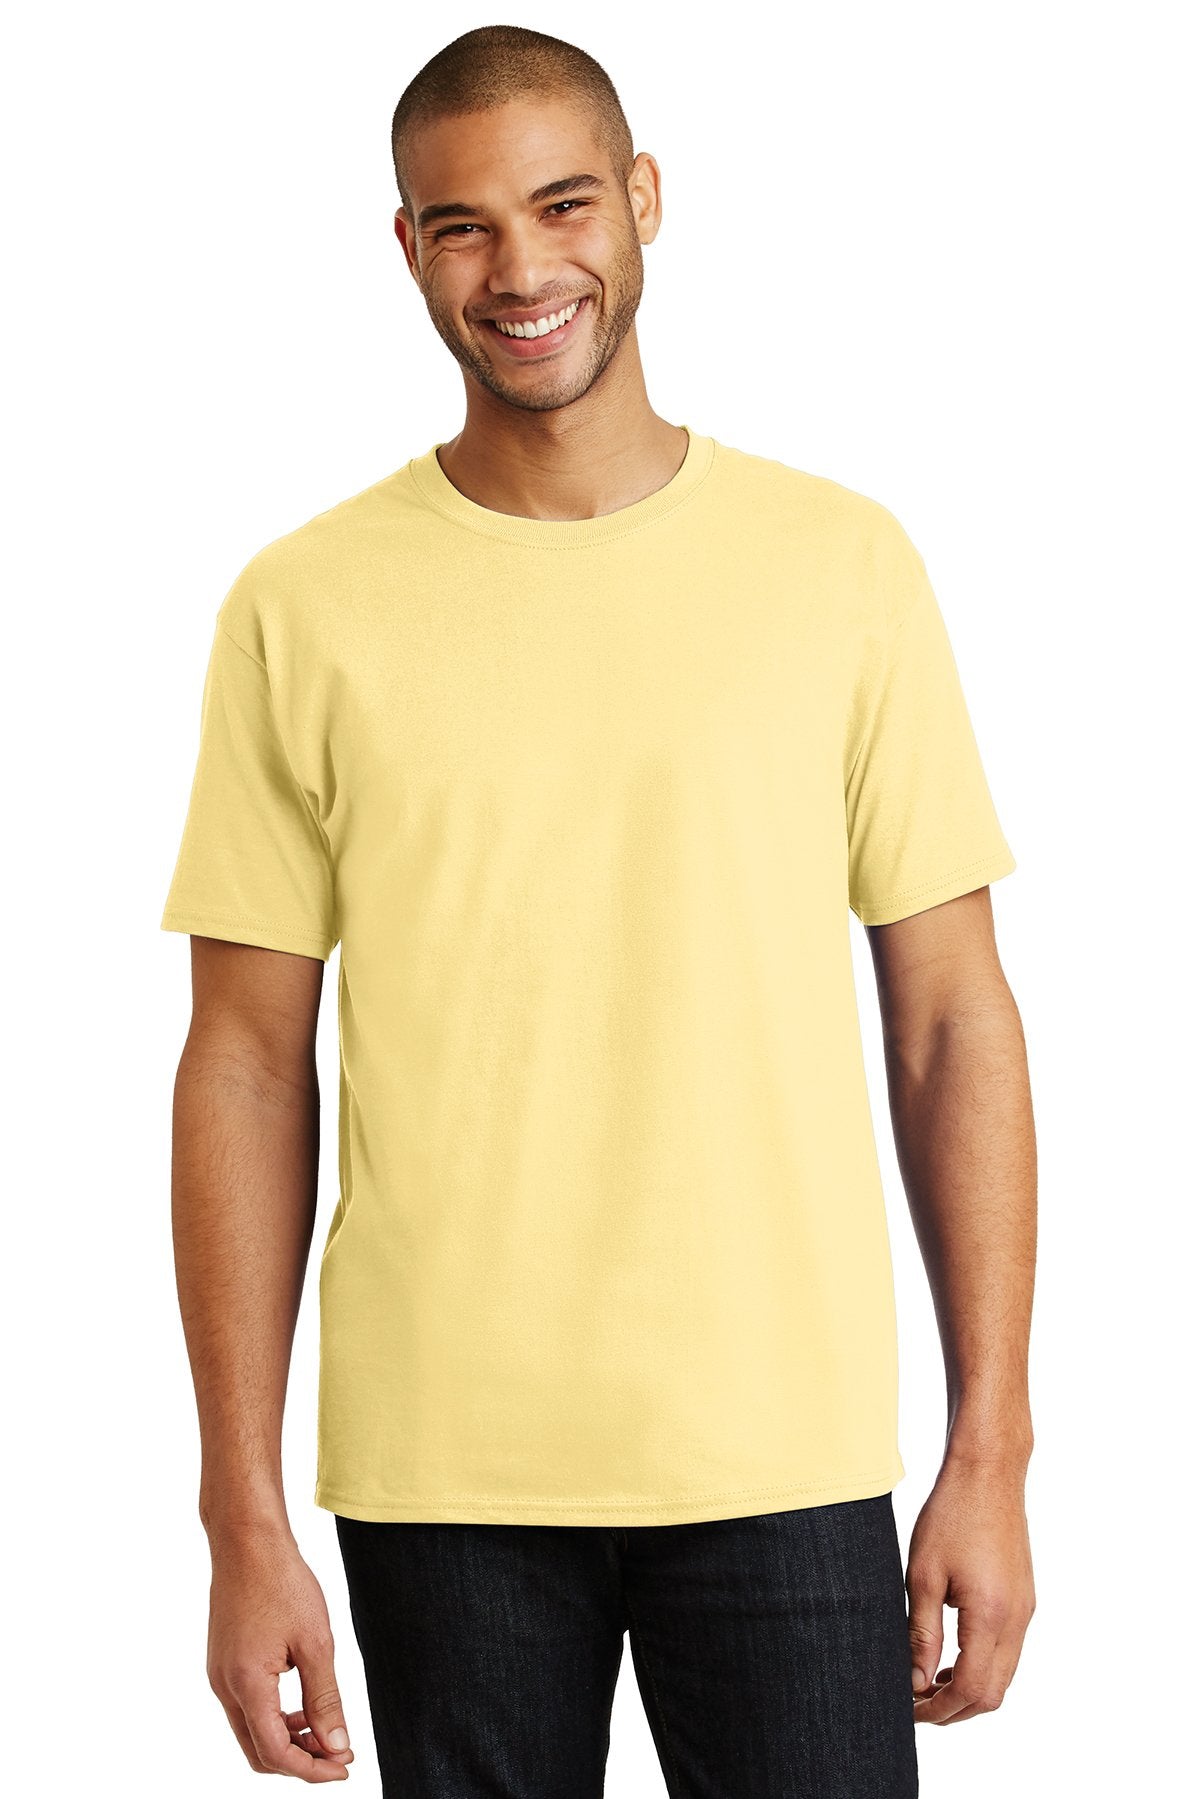 hanes tagless cotton t shirt 5250 daffodil yellow